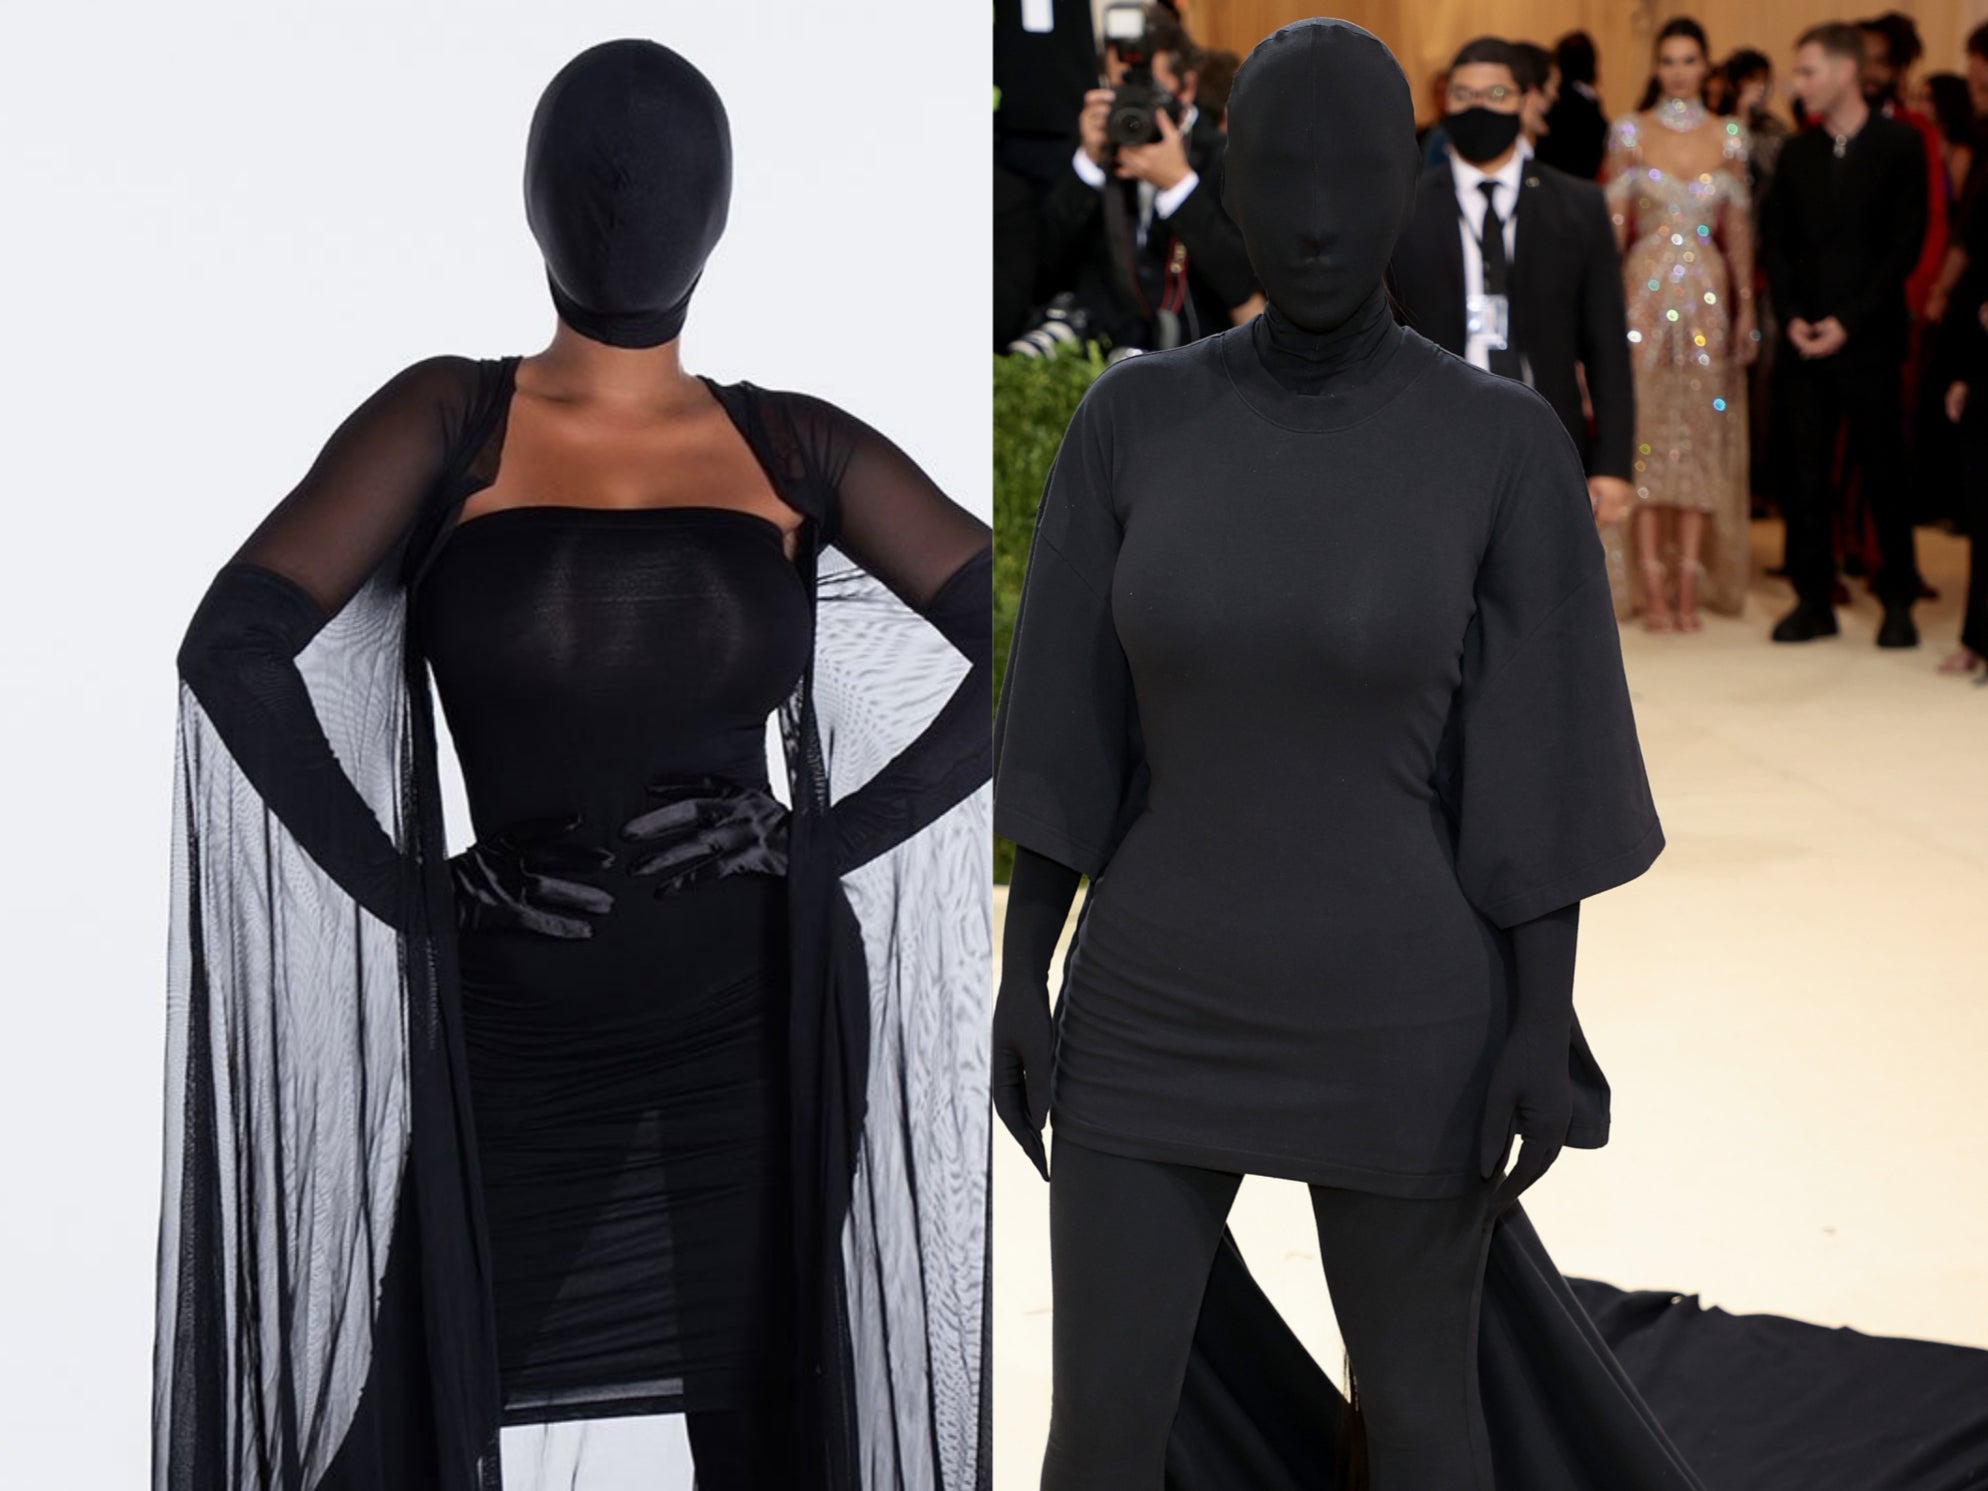 Kim Kardashian’s Met Gala look (R) has been turned into a Halloween costume